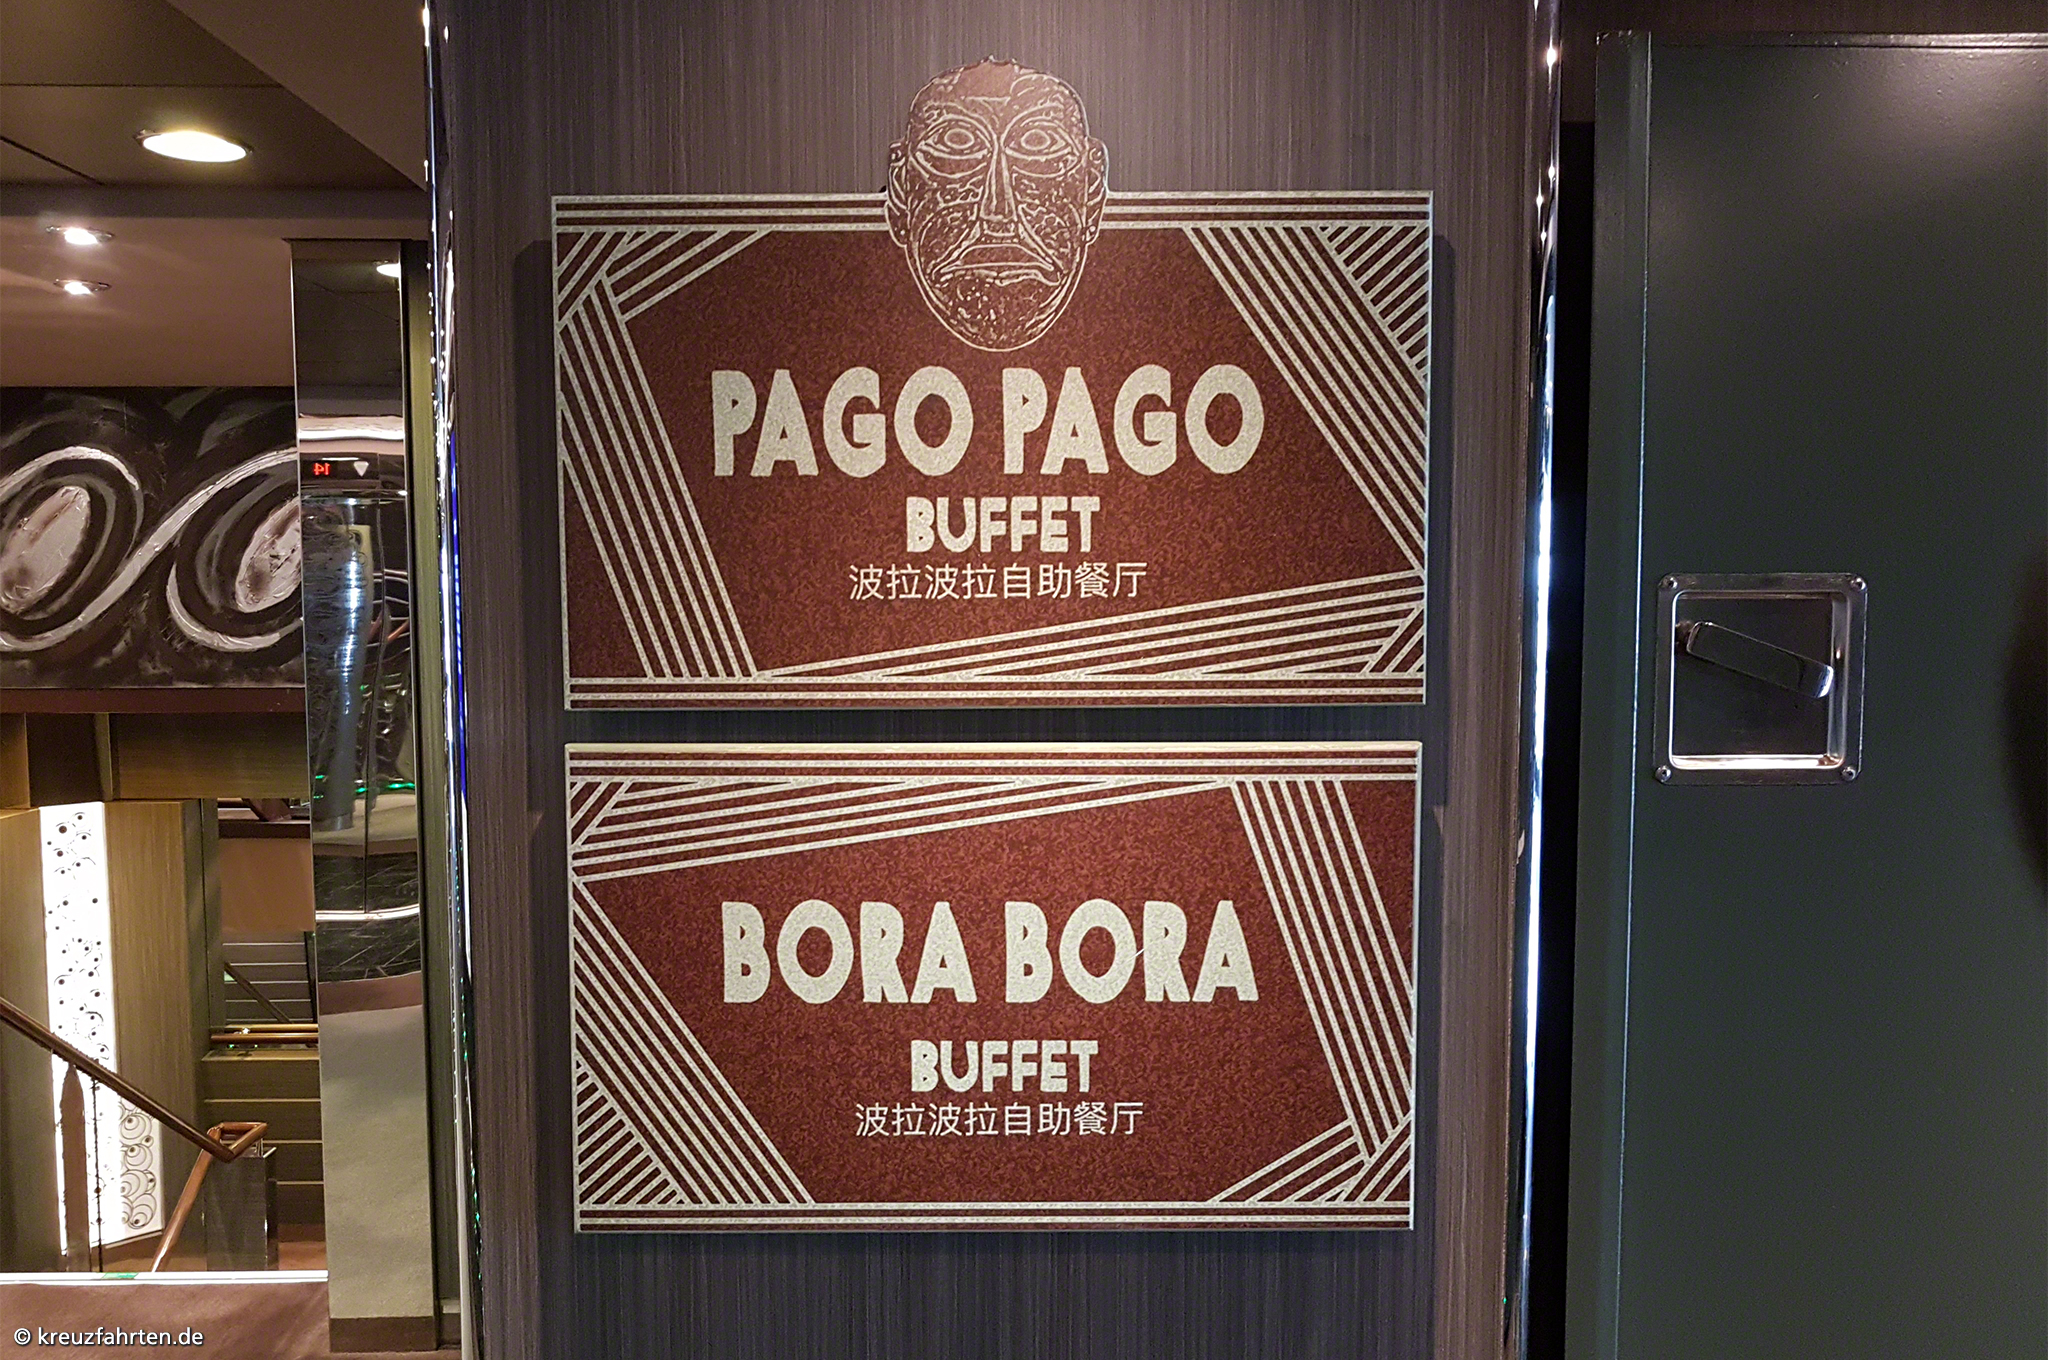 Buffet Restaurant Pago Pago und Bora Bora